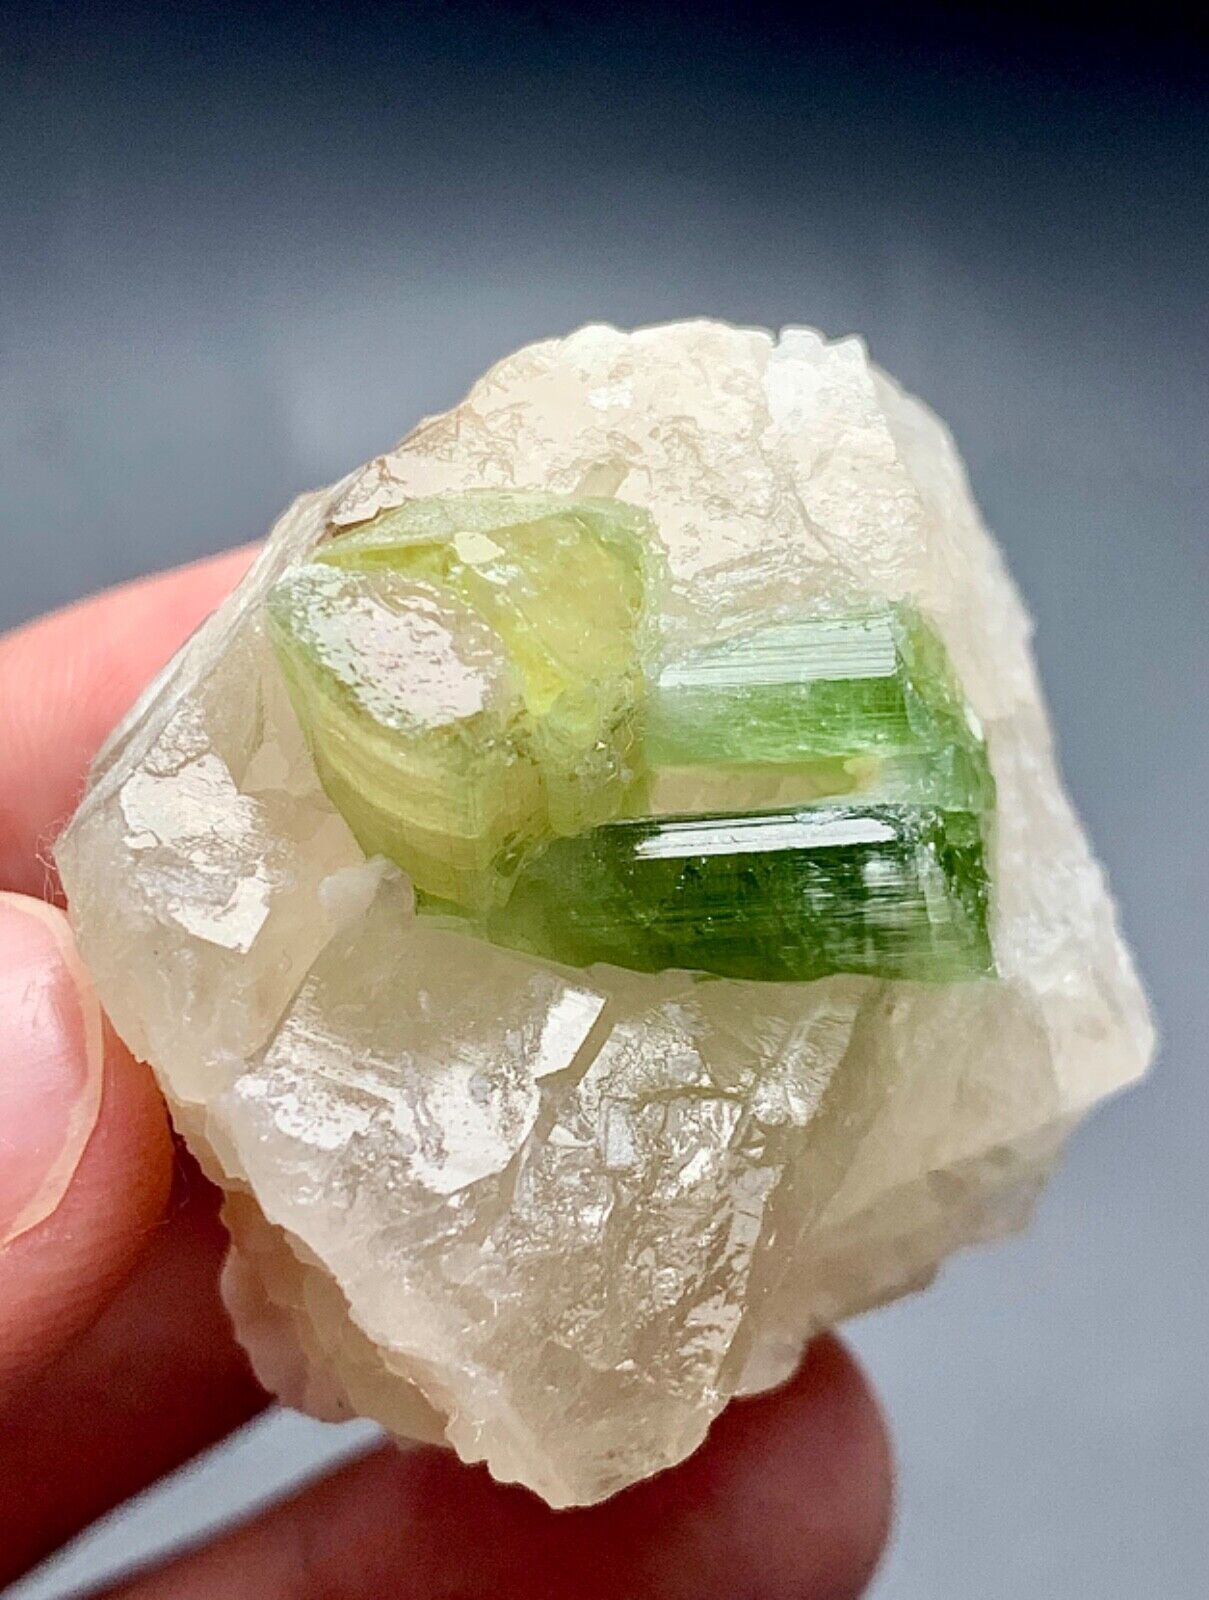 242 CT Tourmaline Crystals On Quartz Specimen From Afghanistan